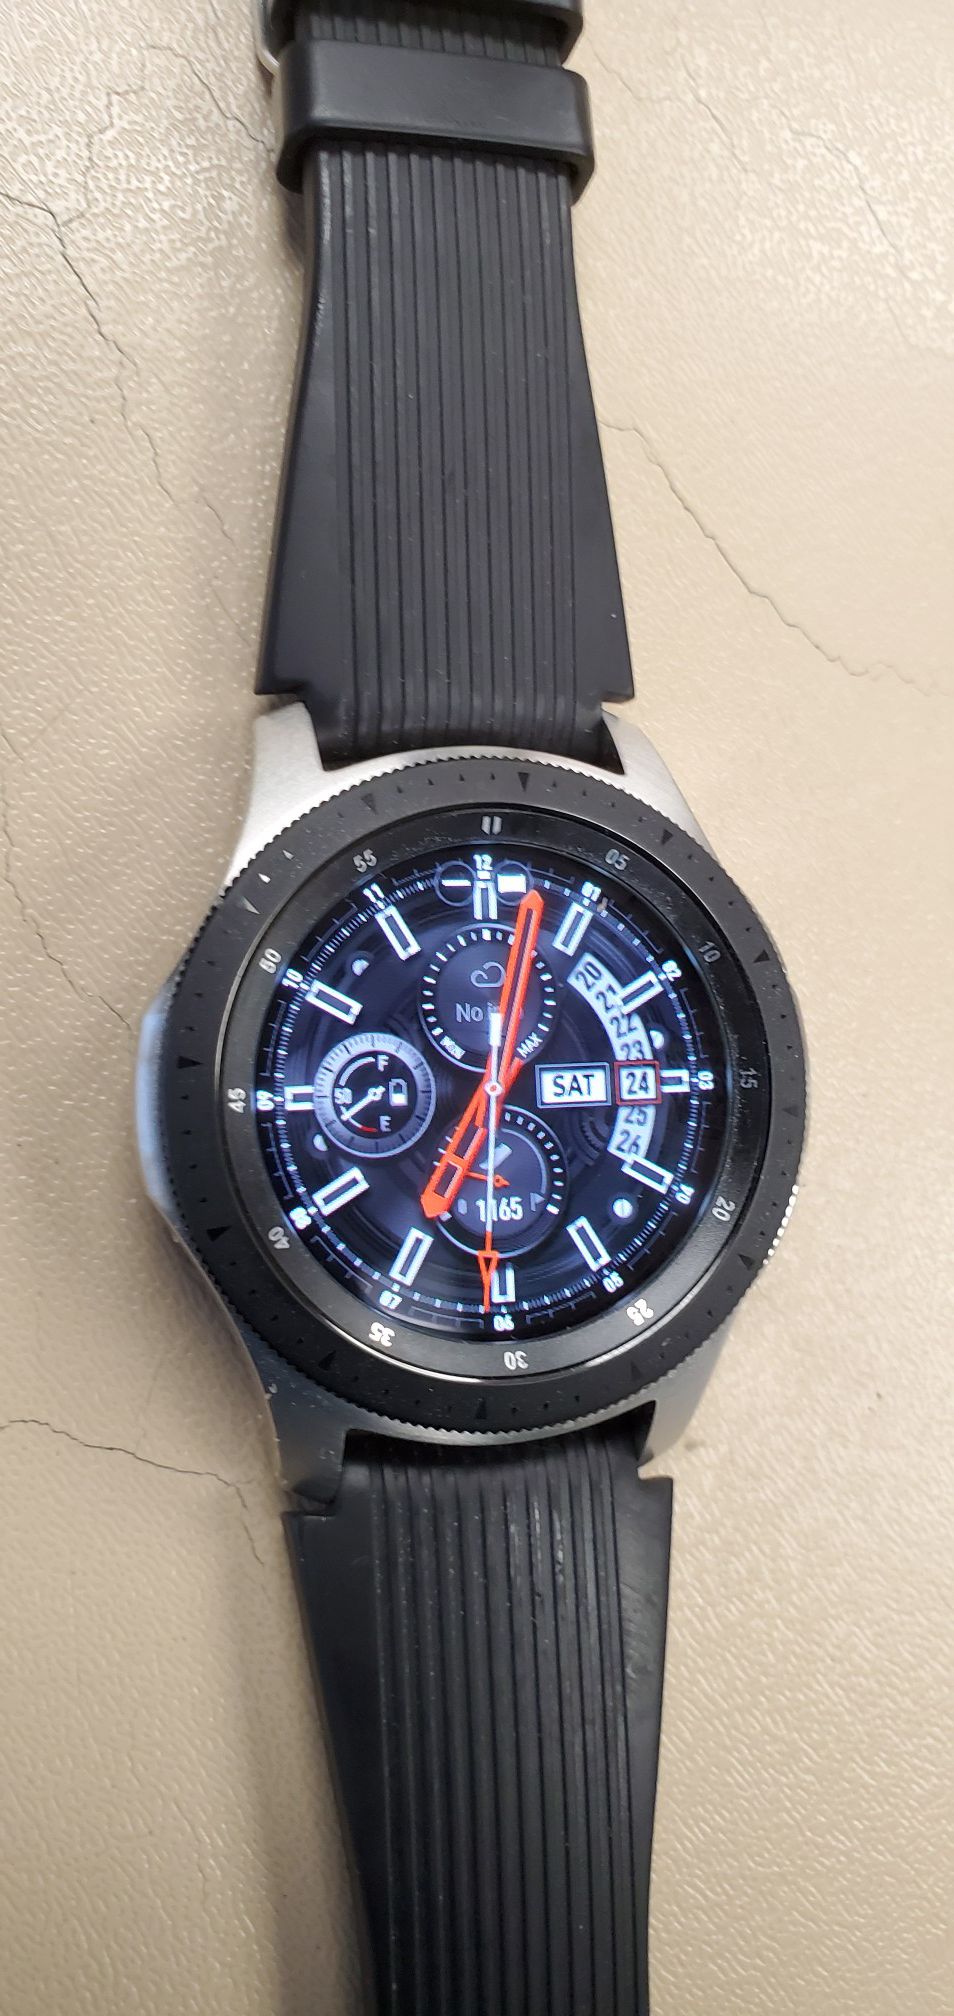 Samsung Galaxy watch 46mm bluetooth +LTE